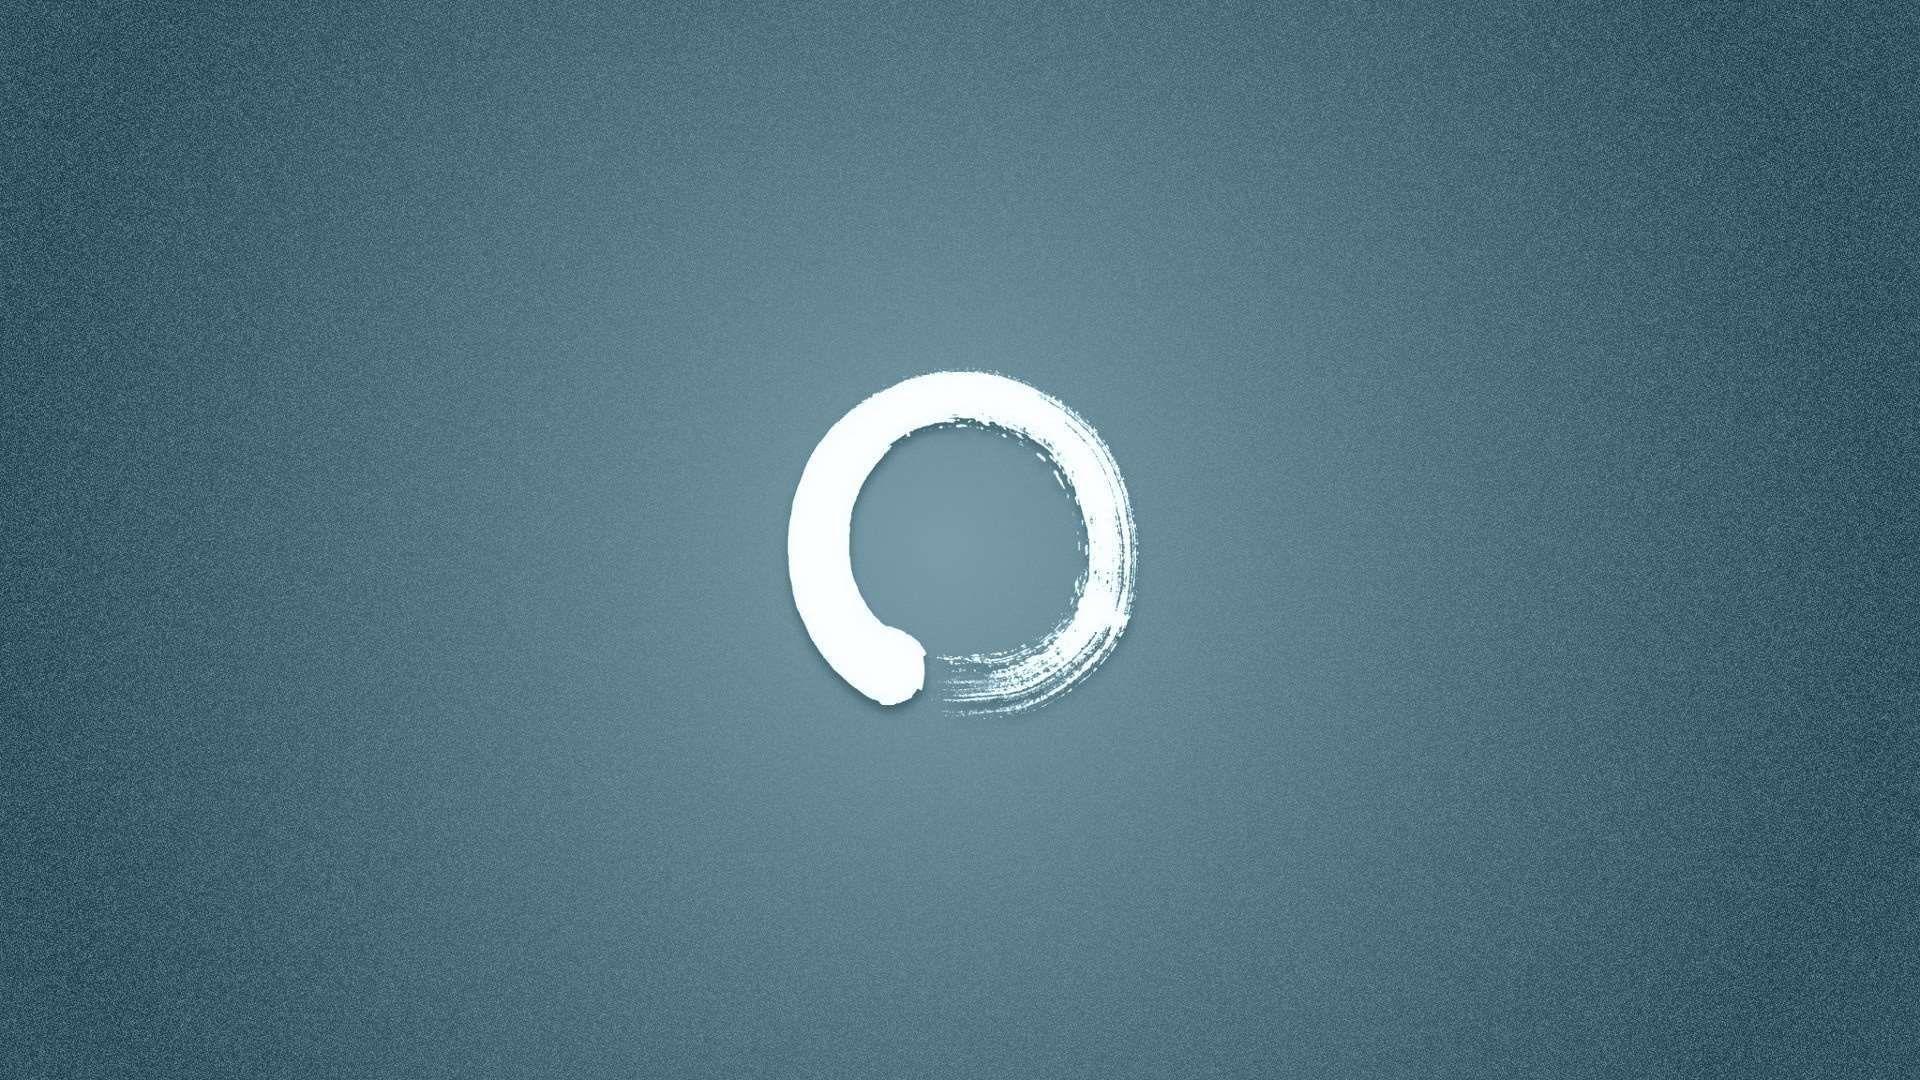 Zen Buddha Logo - minimal #minimalism #symbol #zen | Backgrounds in 2019 | Pinterest ...